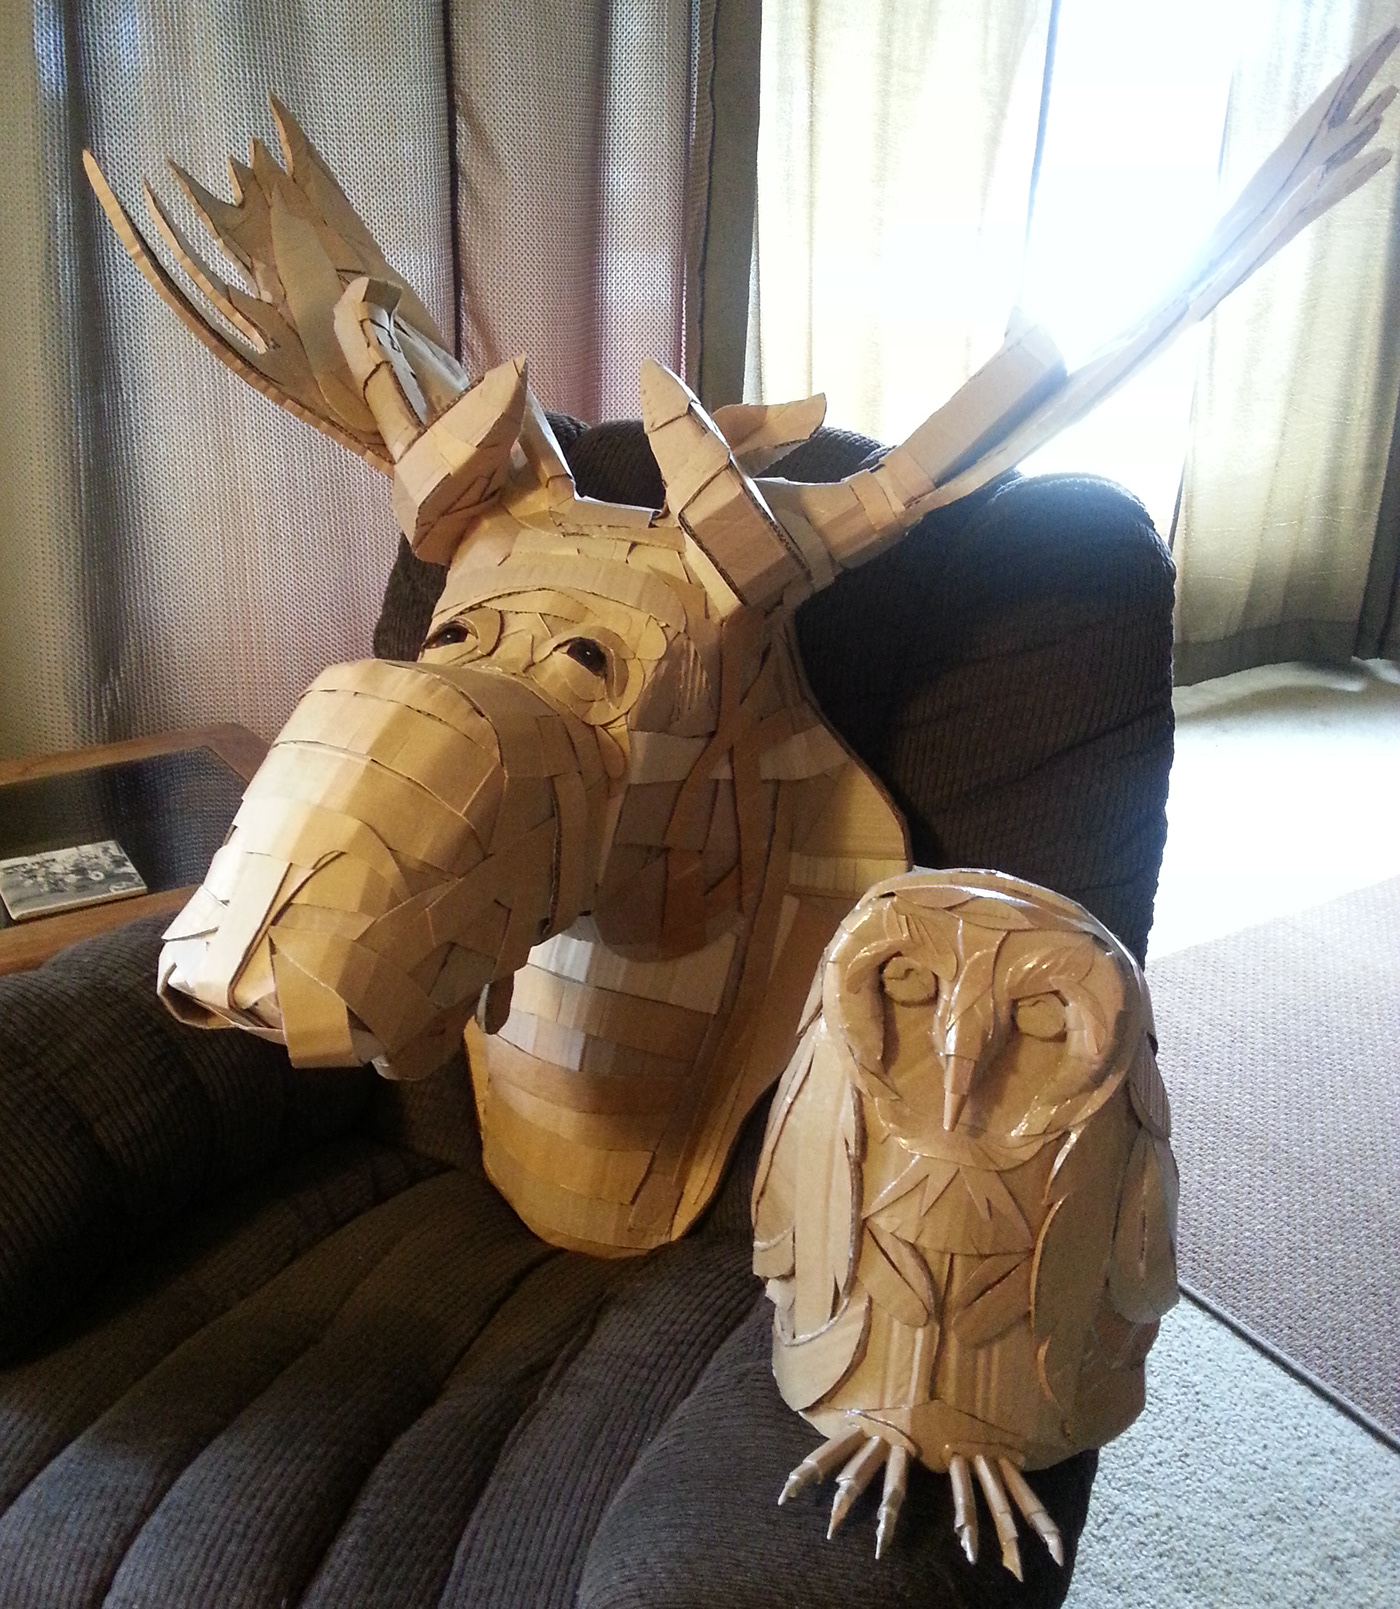 cardboard art Cardboard sculpture owl art owl sculpture recycled art upcycled